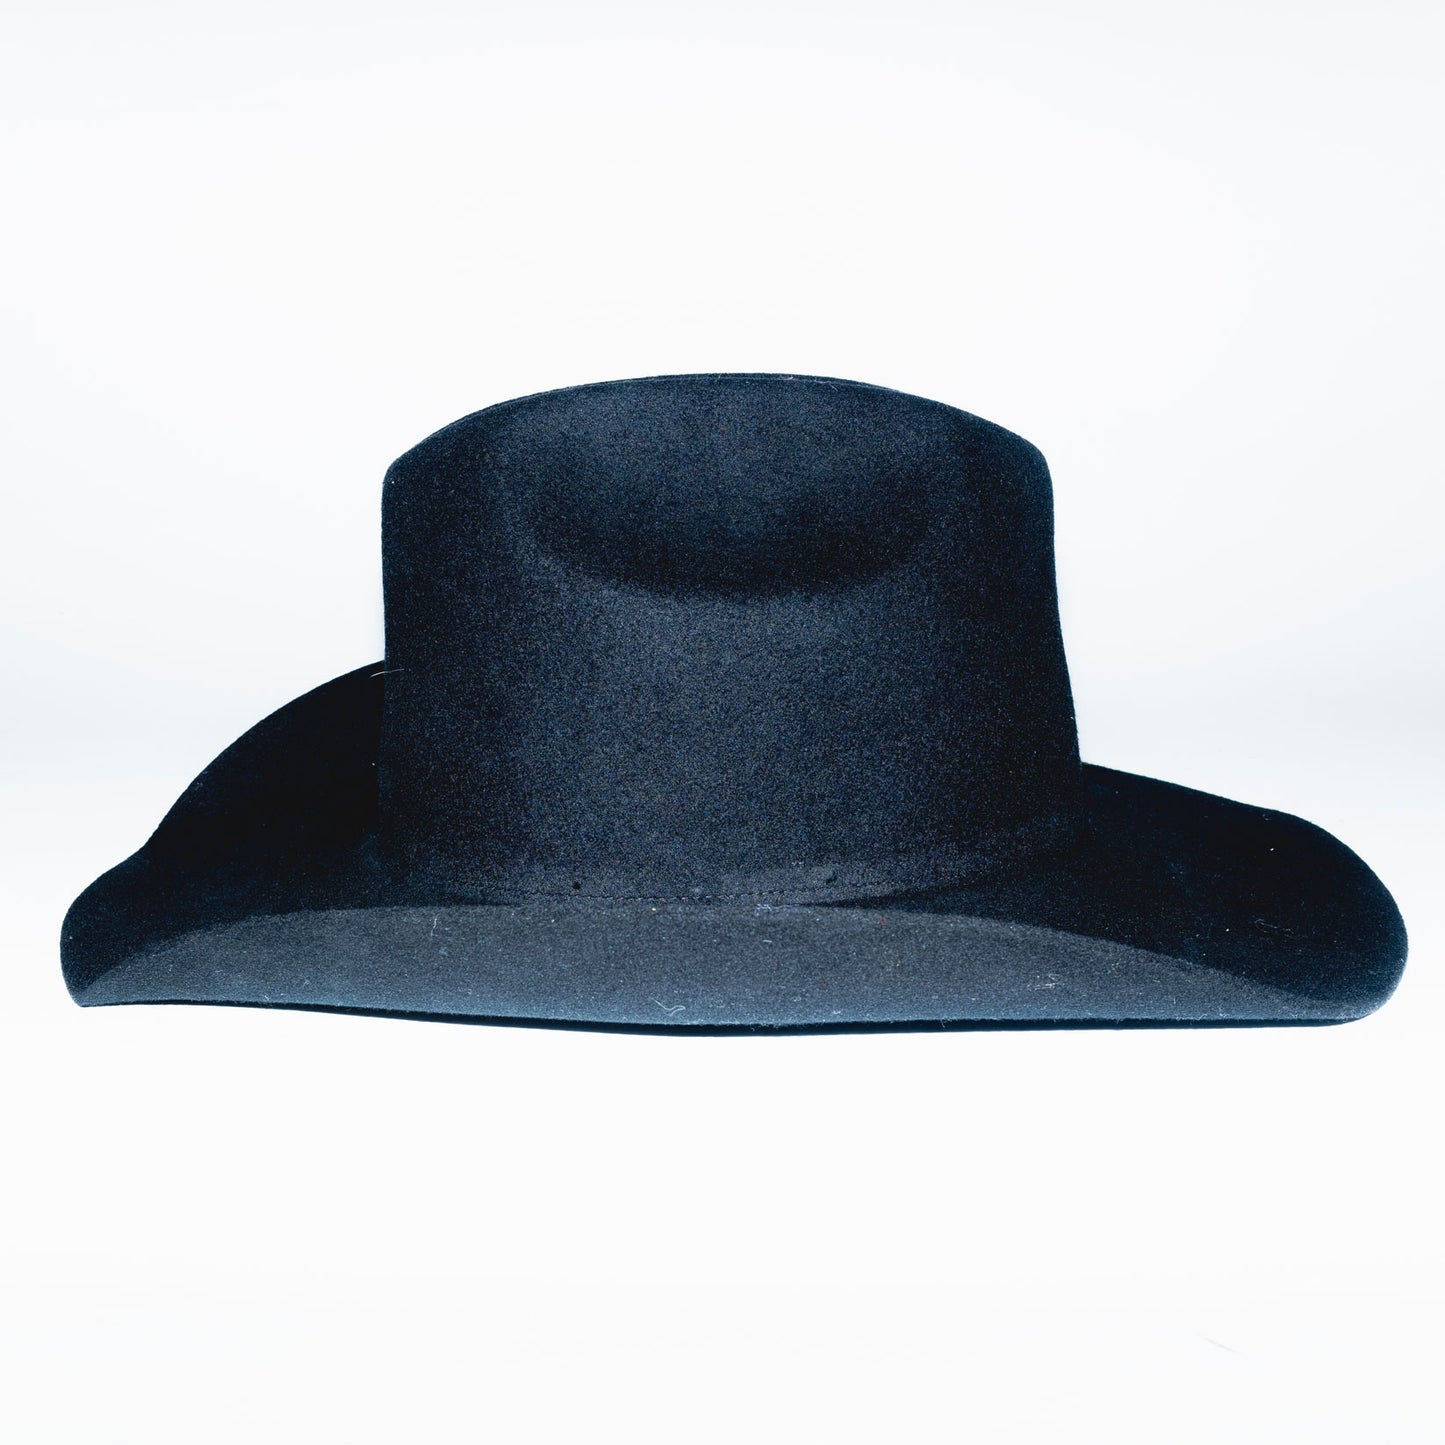 Archive Cowboy Hat in Black Felt